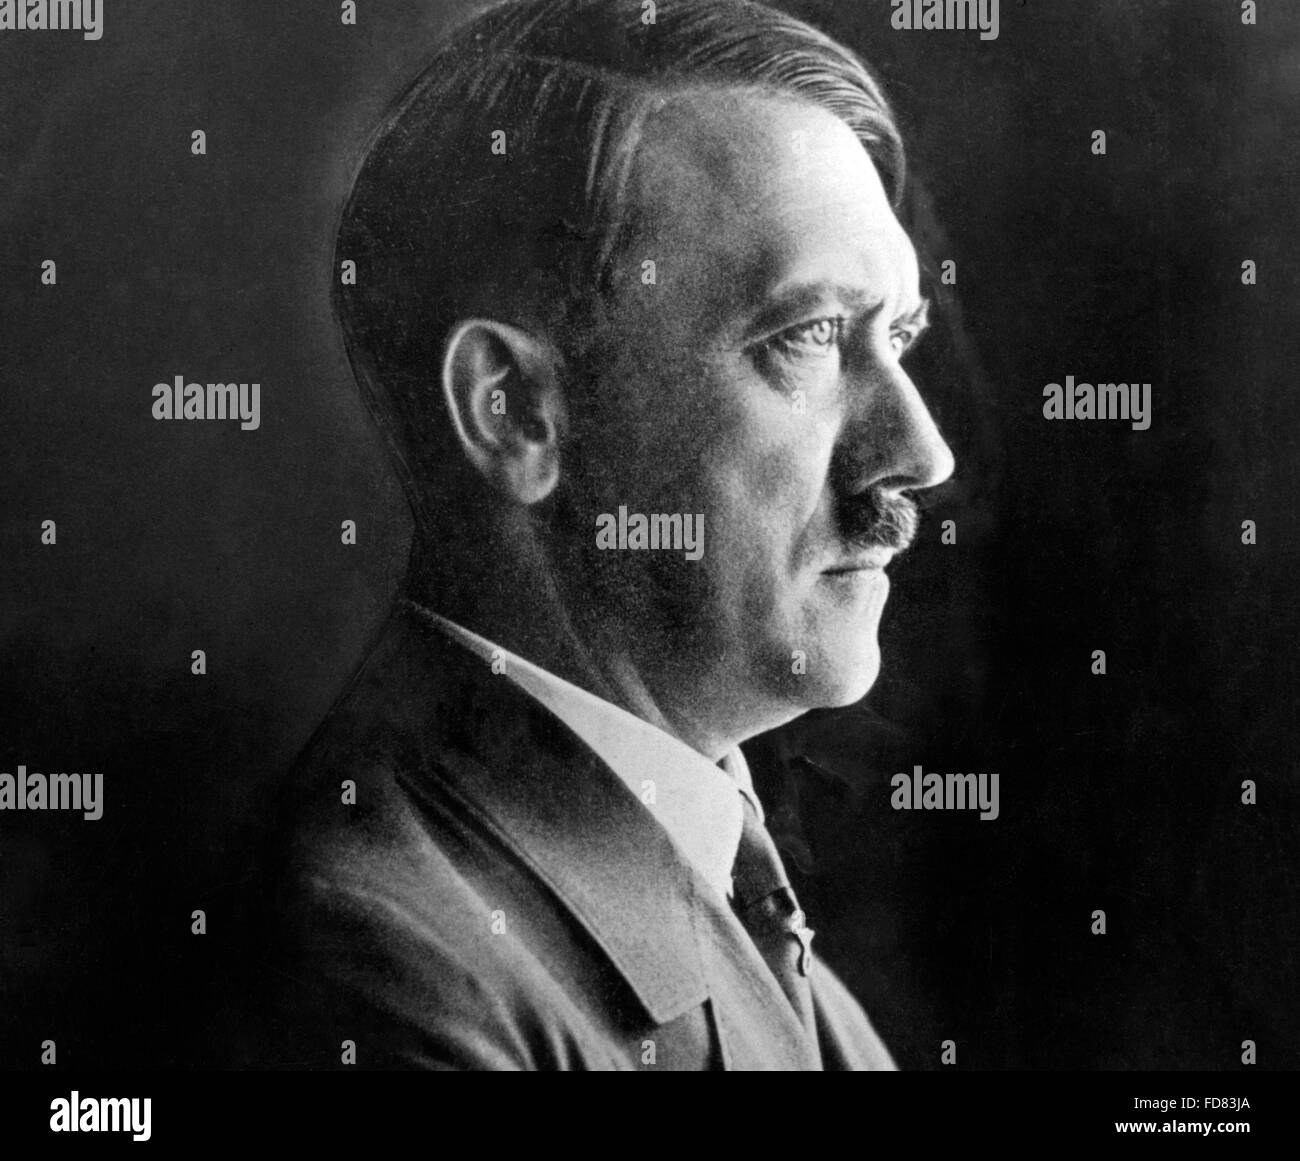 Retrato de perfil de Adolf Hitler, 1938 Foto de stock